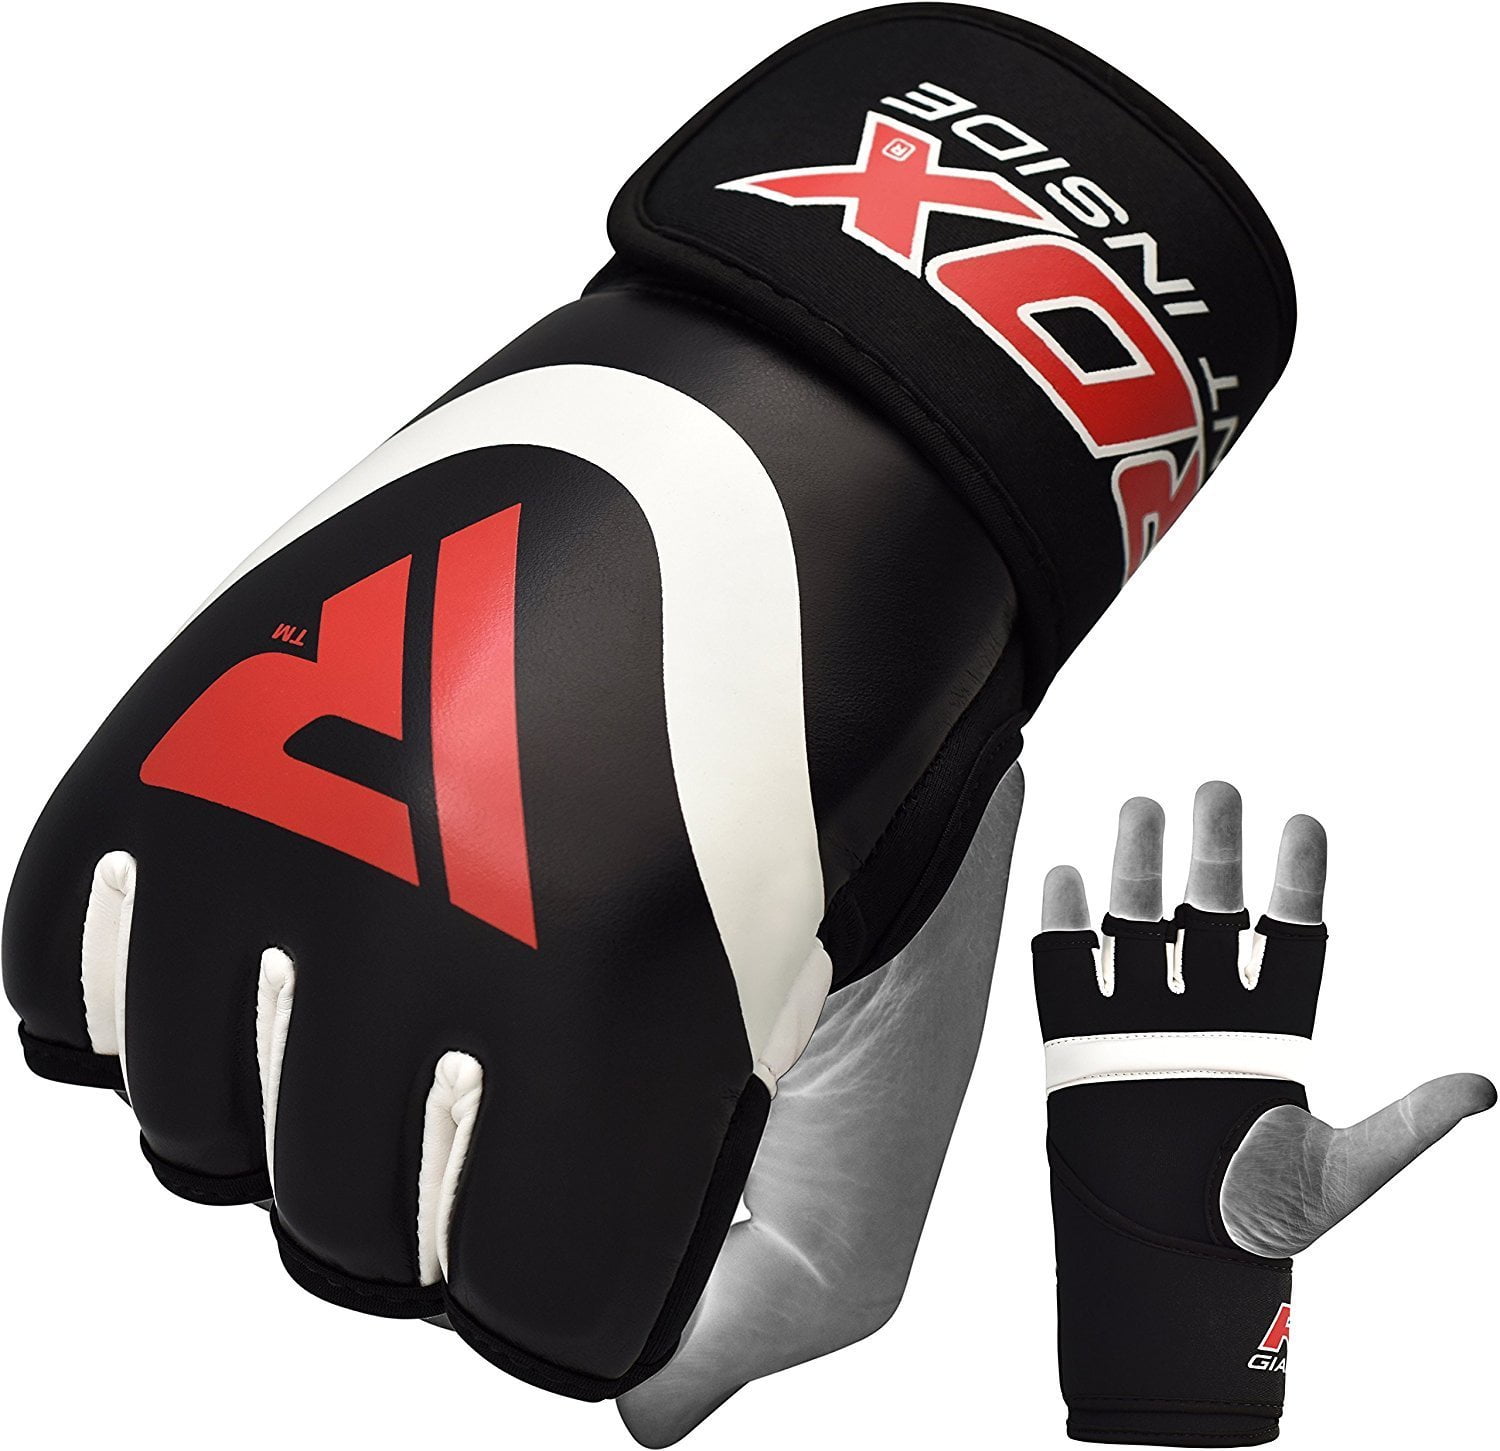 Be Smart® Bandages Hand Wraps MMA Boxing Inner Gloves Mitt Protector MuayThai 